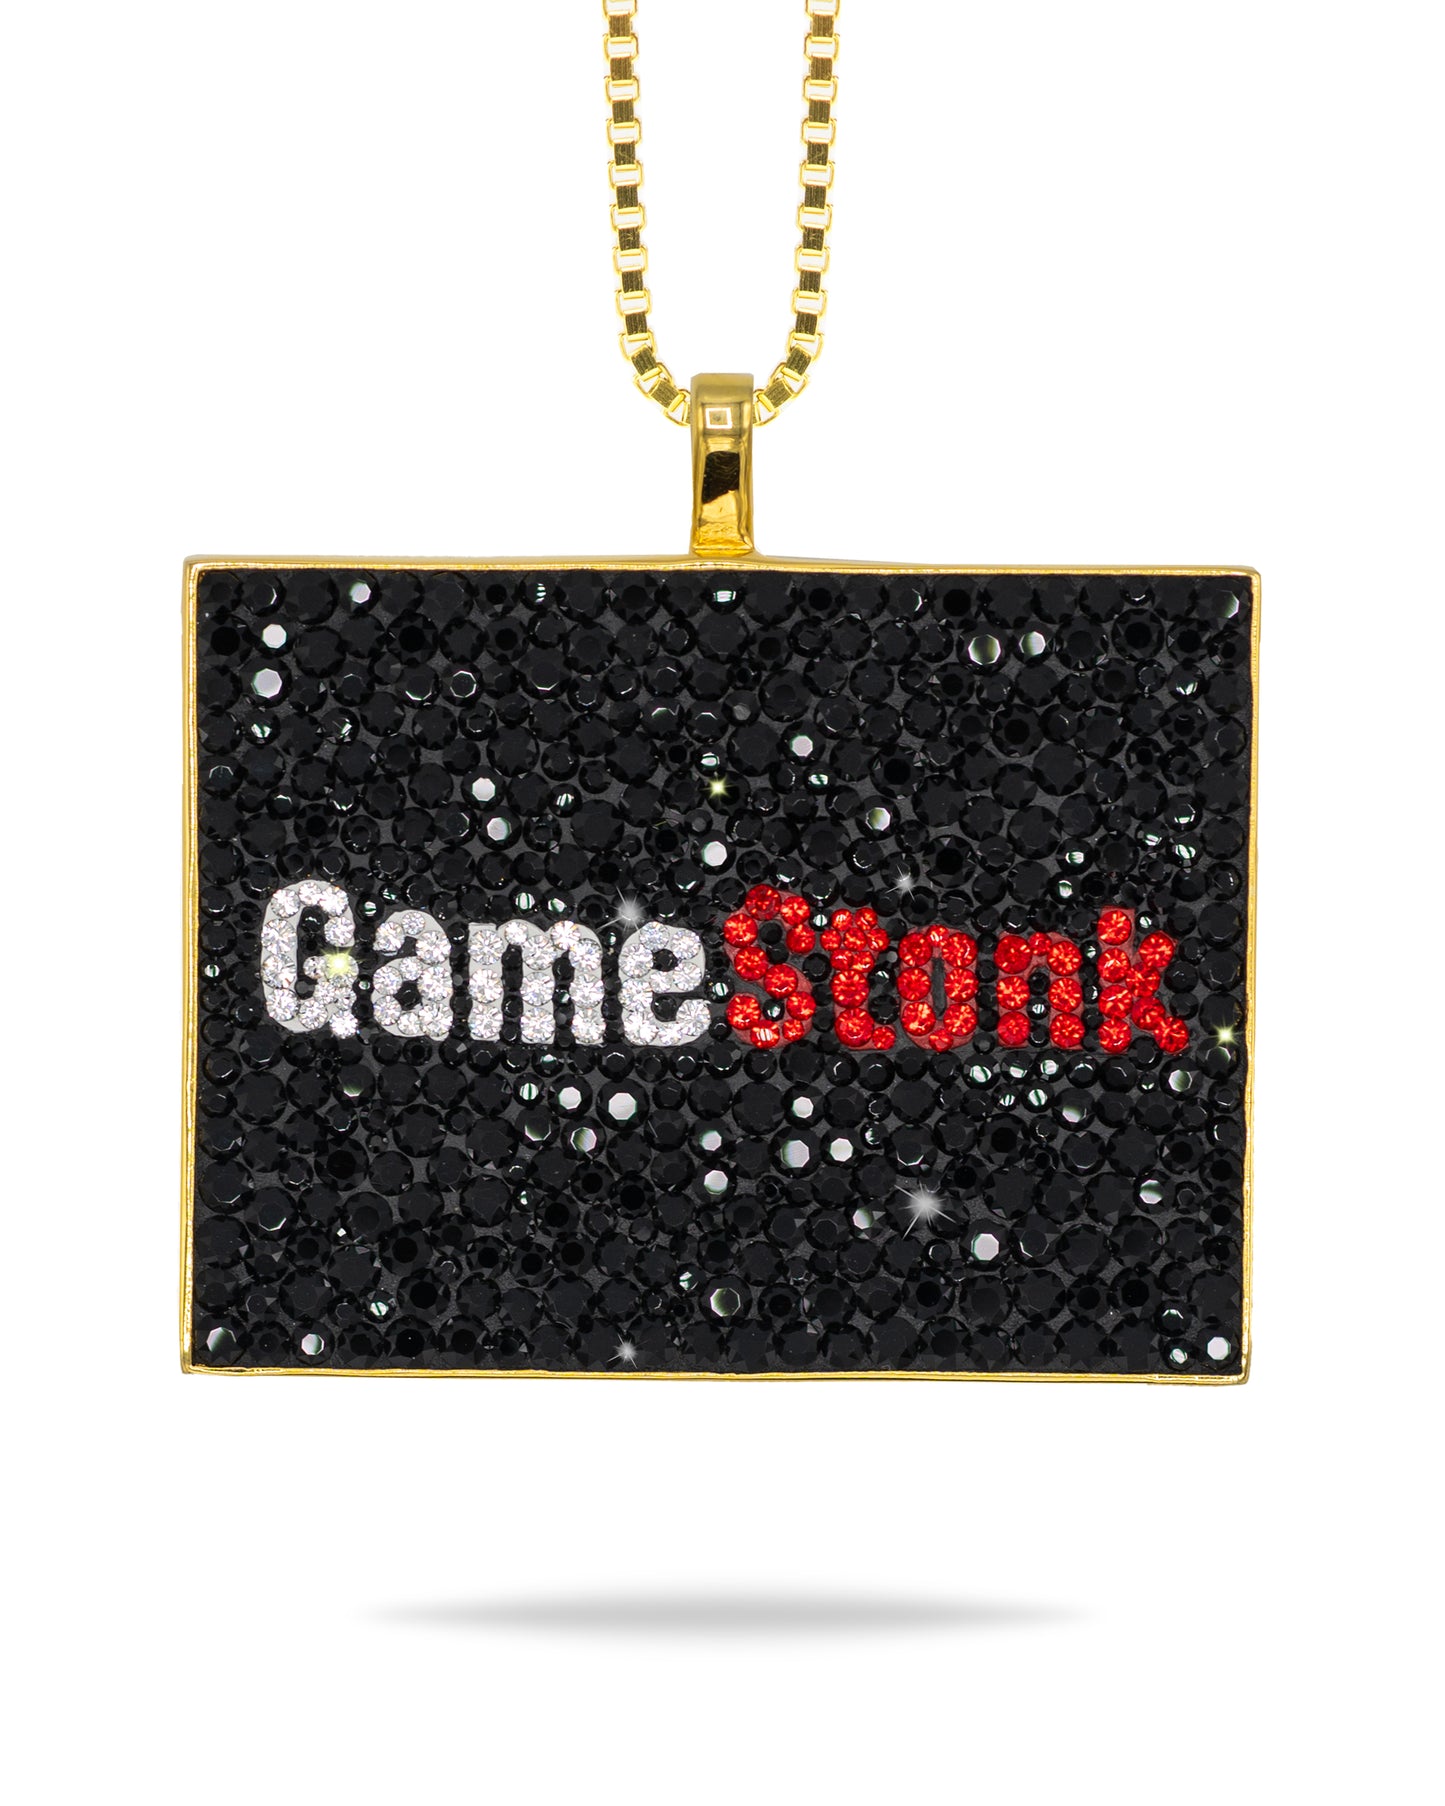 GameStonk - SAMPLE